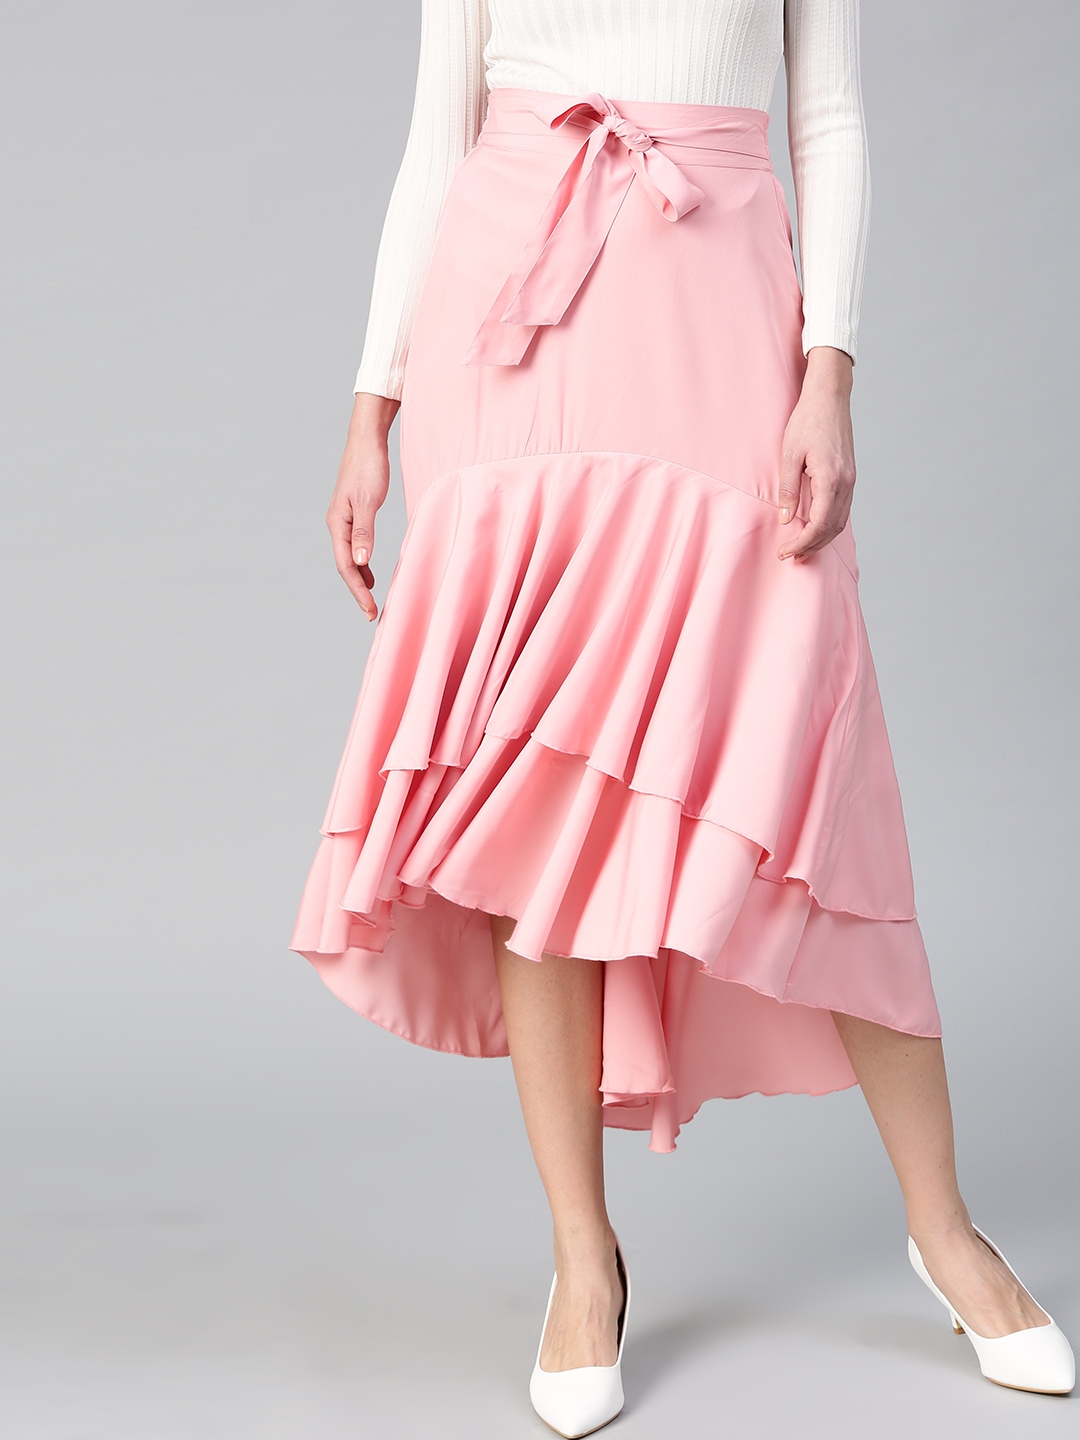 

Bitterlime Pink Layered Ruffled A-line Skirt